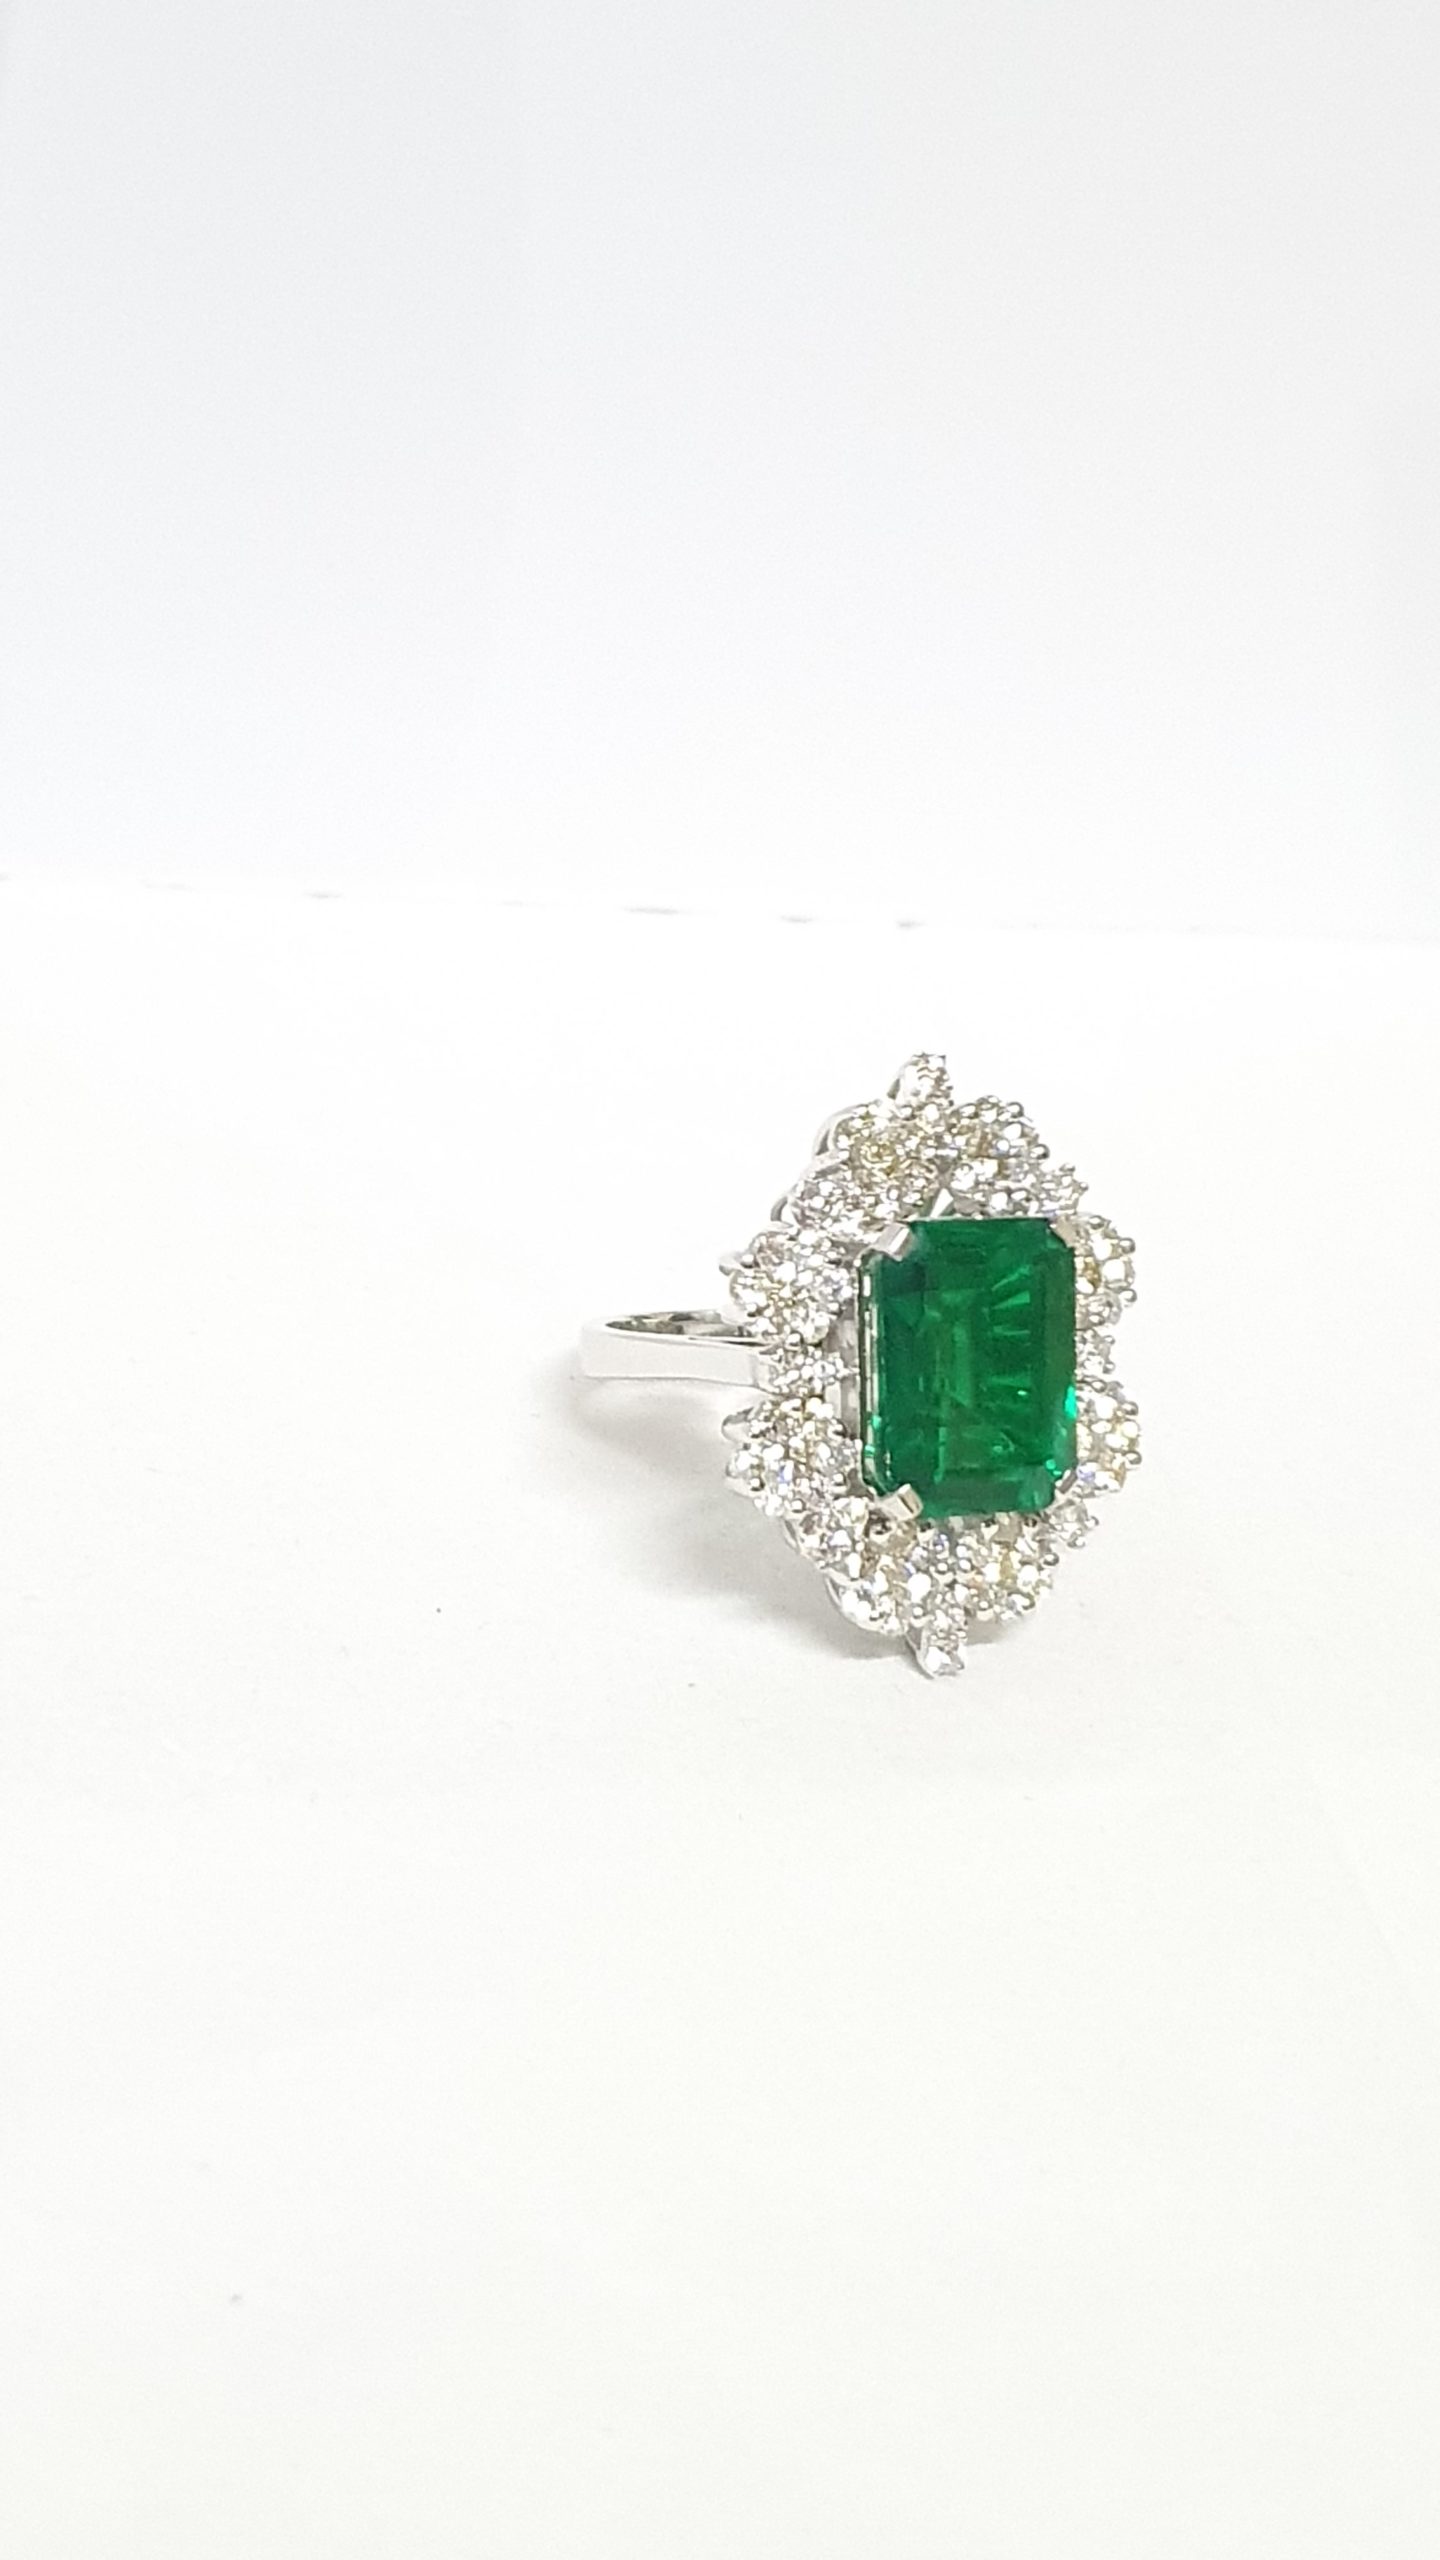 Emerald Rings & Jewelry - May Birthstone | EraGem